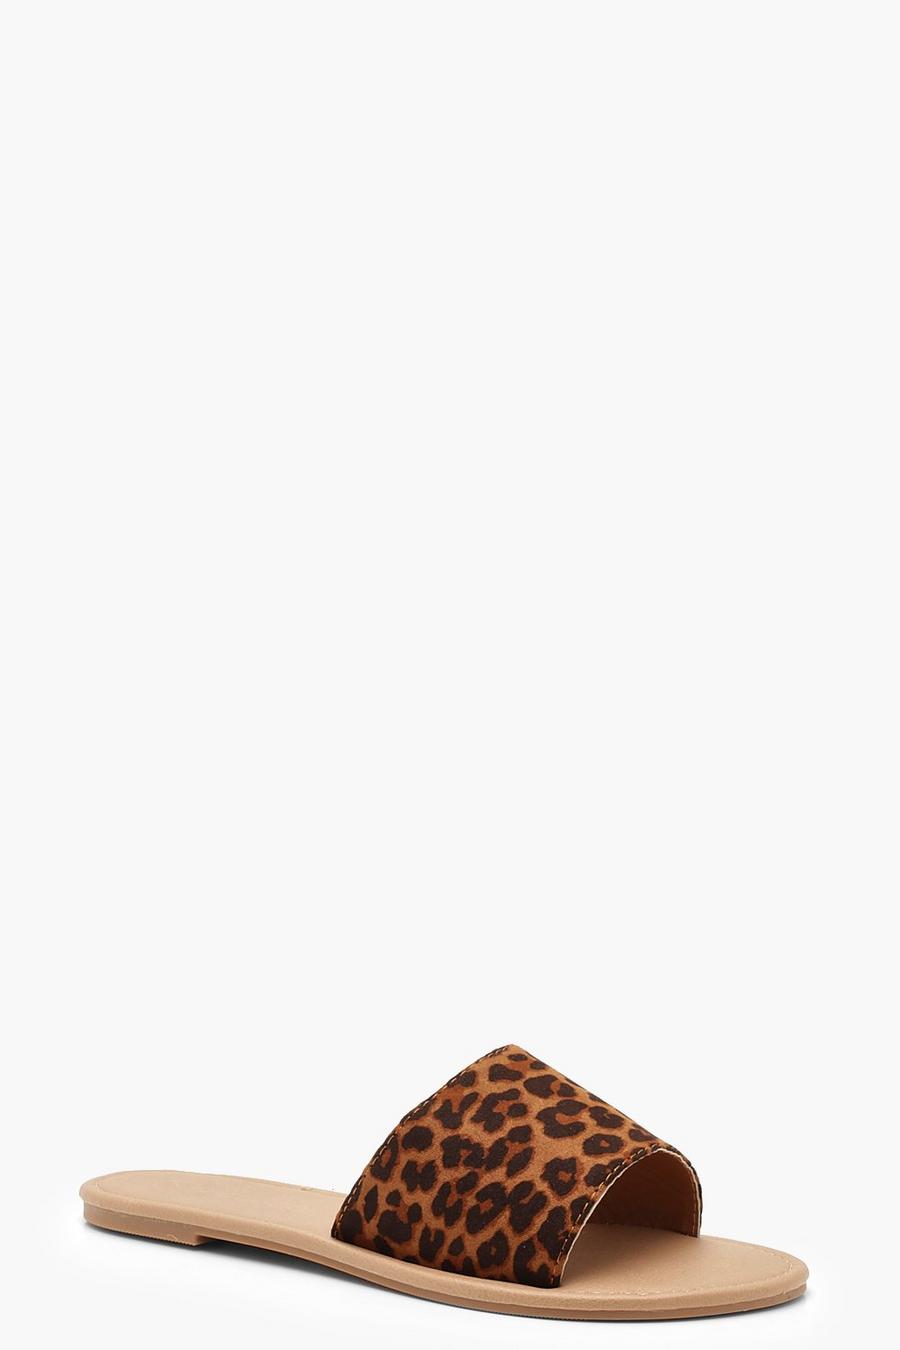 Basic Leopard Slides